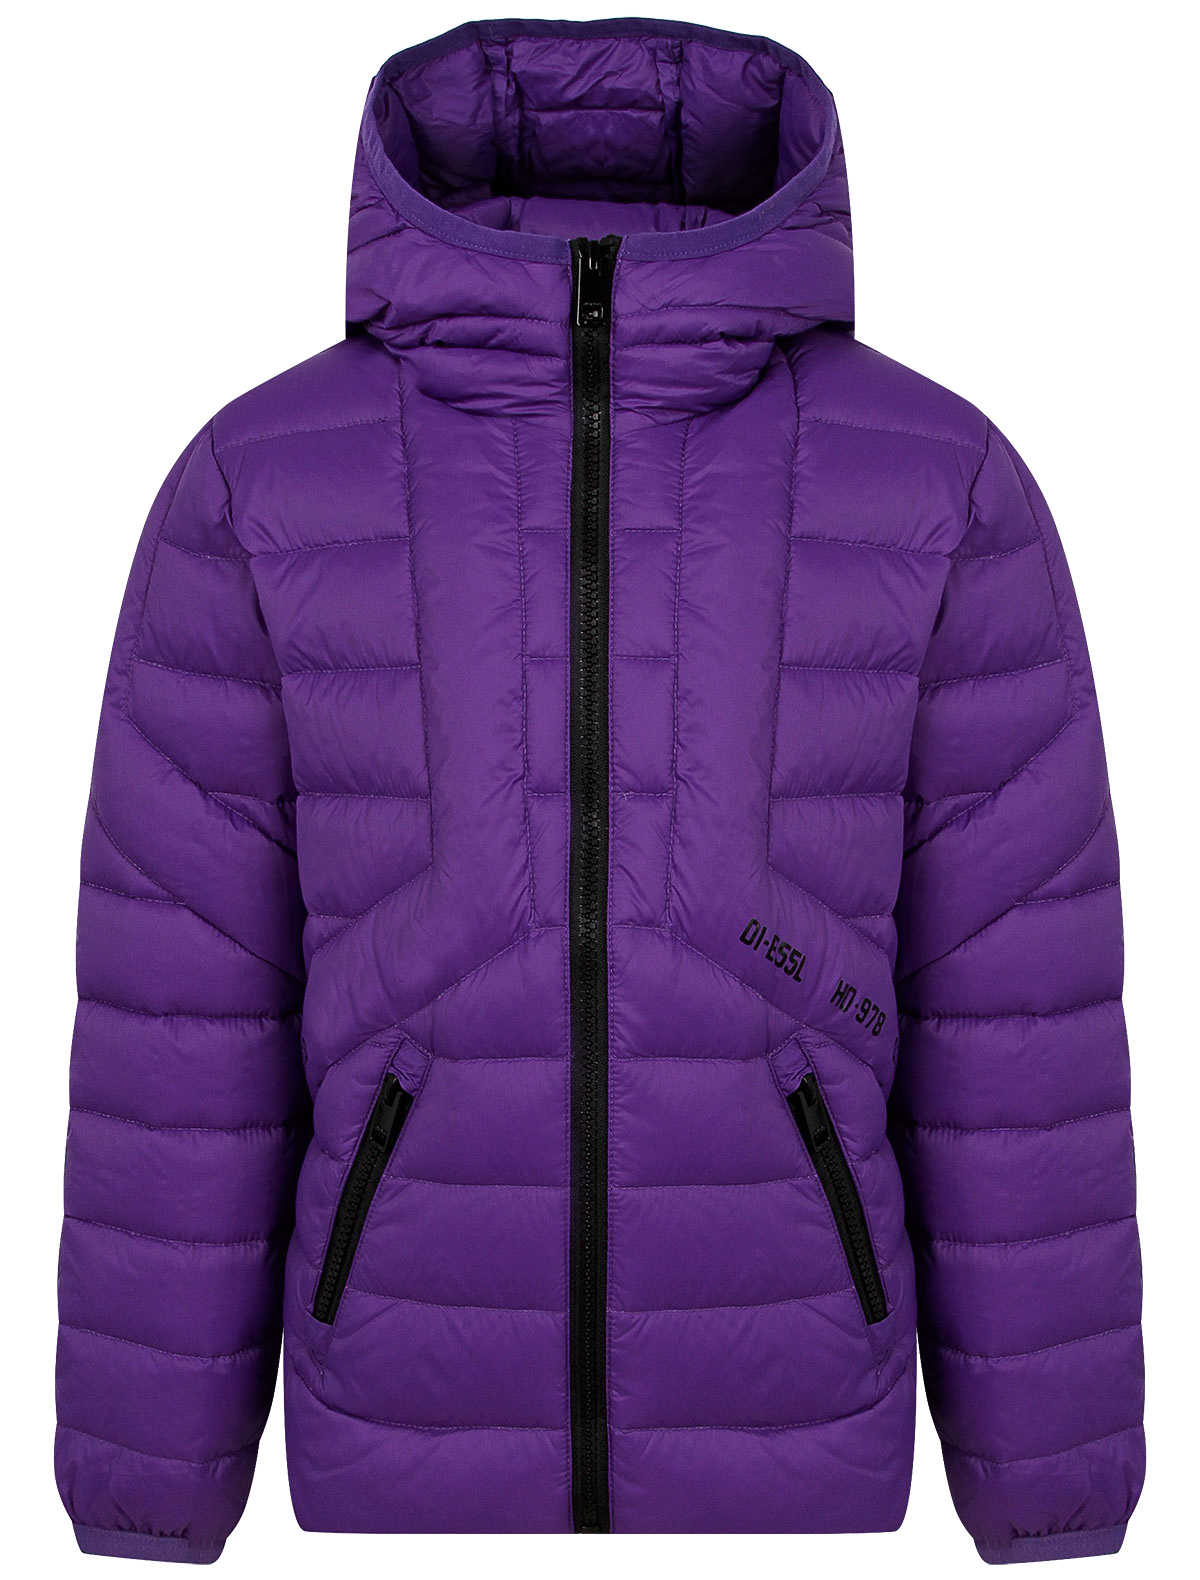 Куртка Diesel 2345493, цвет фиолетовый, размер 15 1074529181136 - фото 1